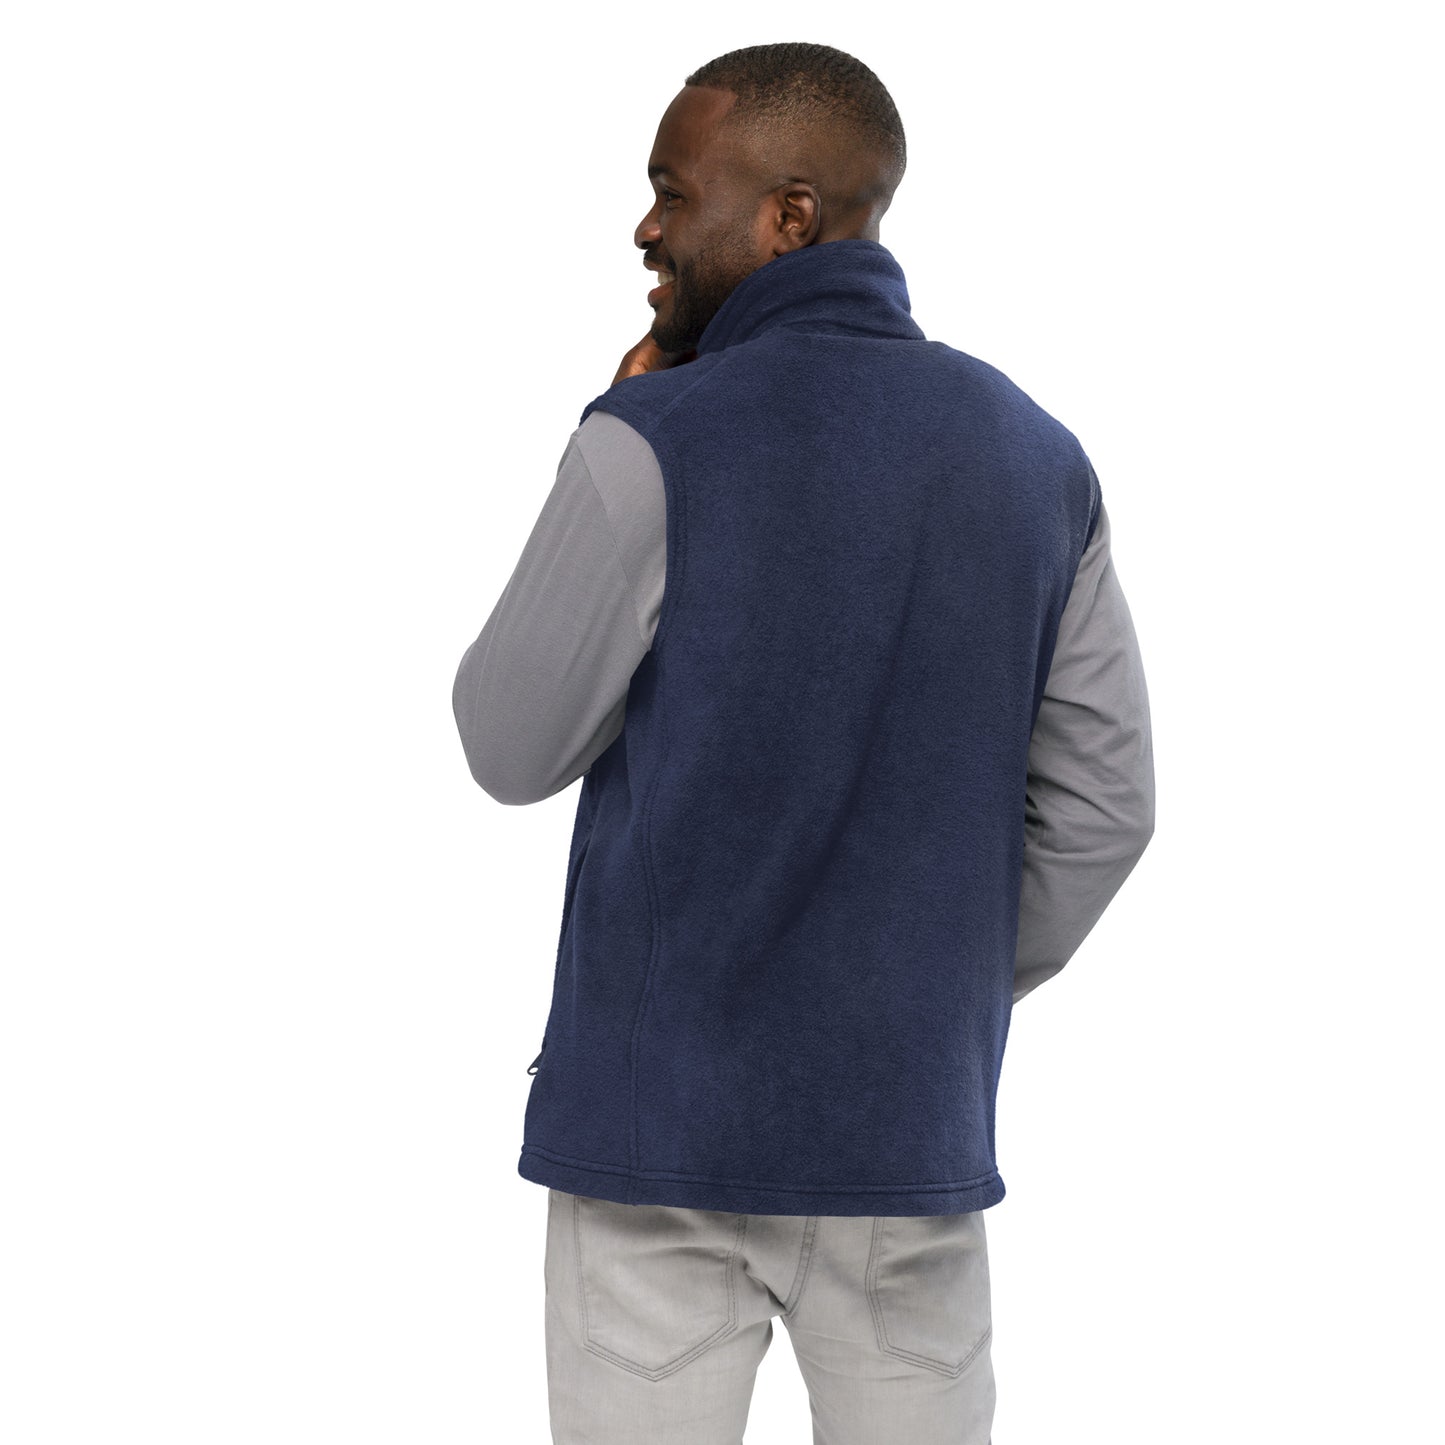 Men’s "PROGRESS OVER PERFECTION" Embroidered Columbia Fleece Vest